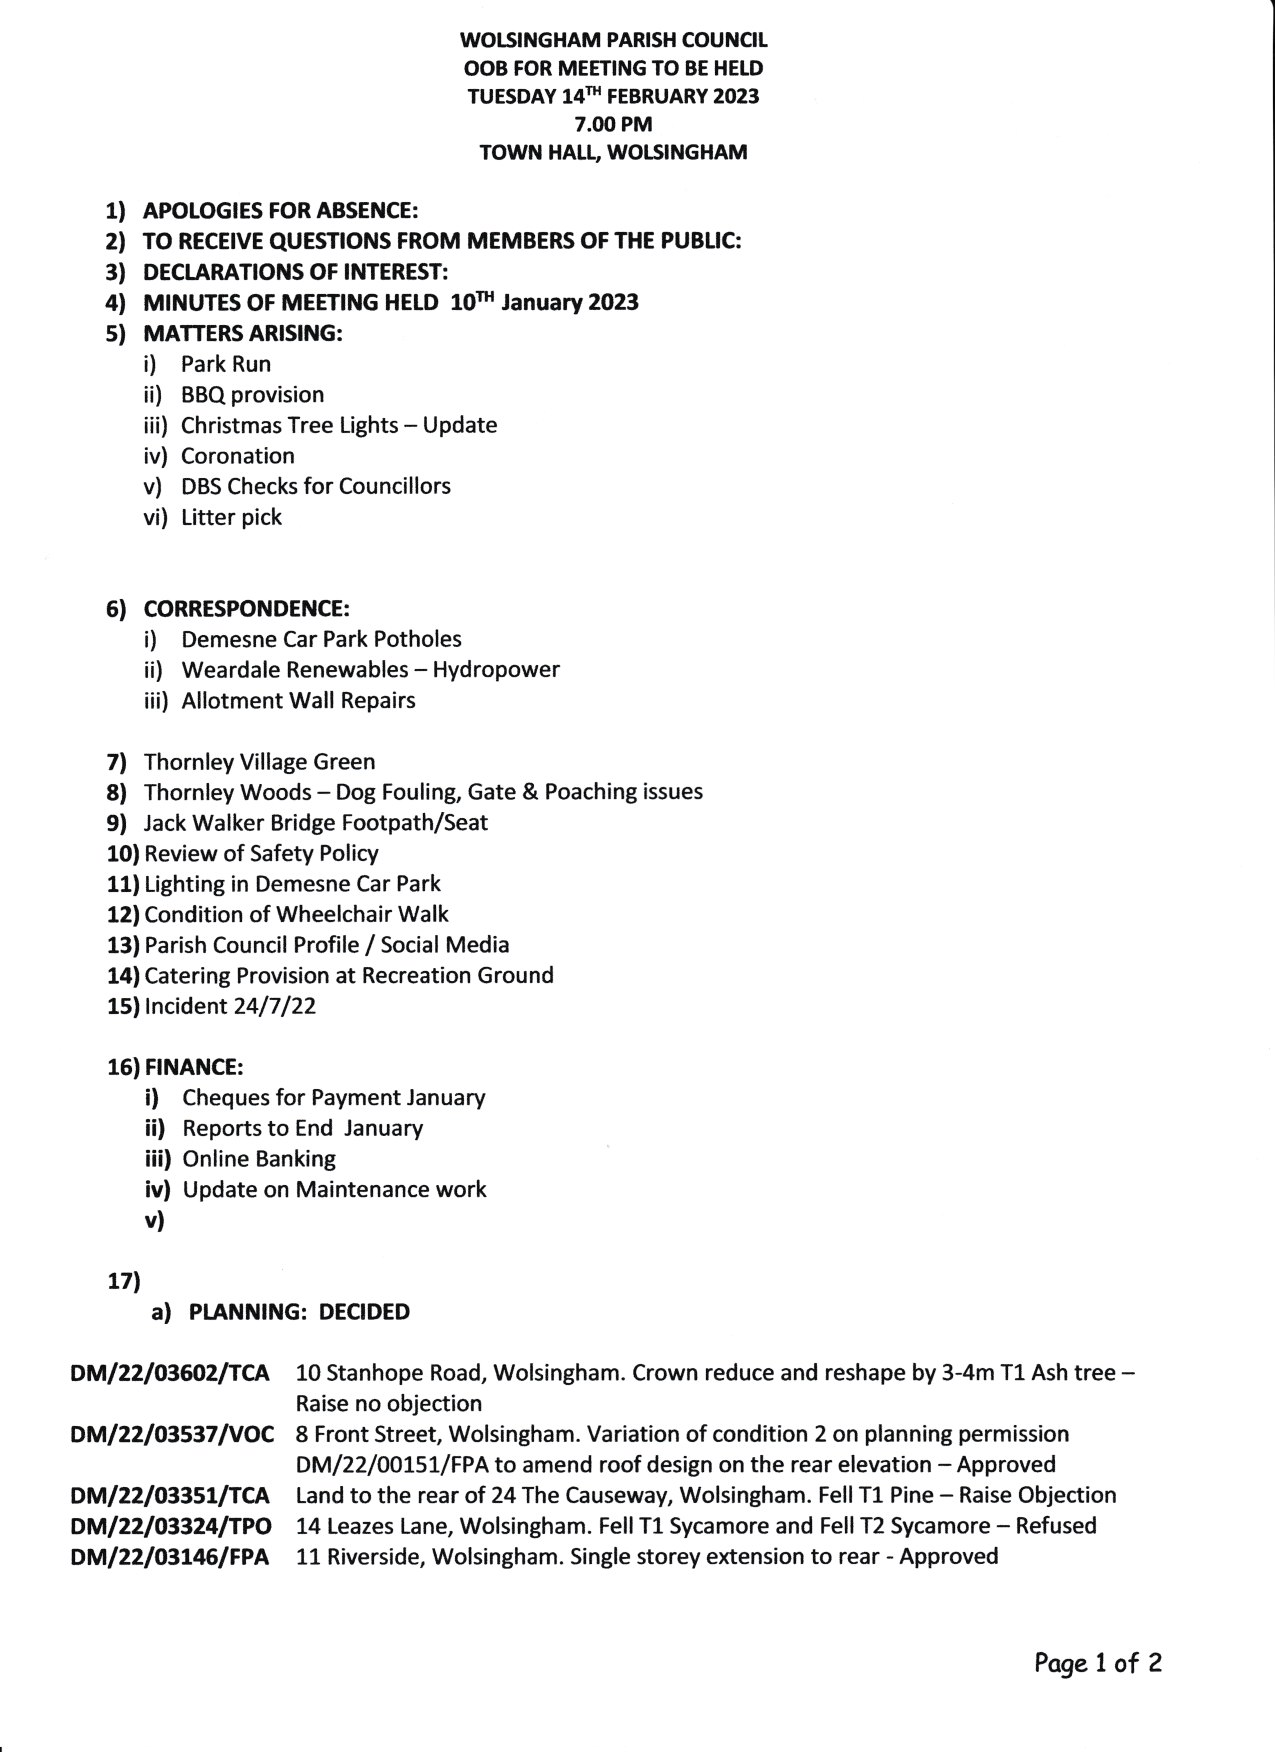 Wolsingham Parish Council Agenda 14th February 2023